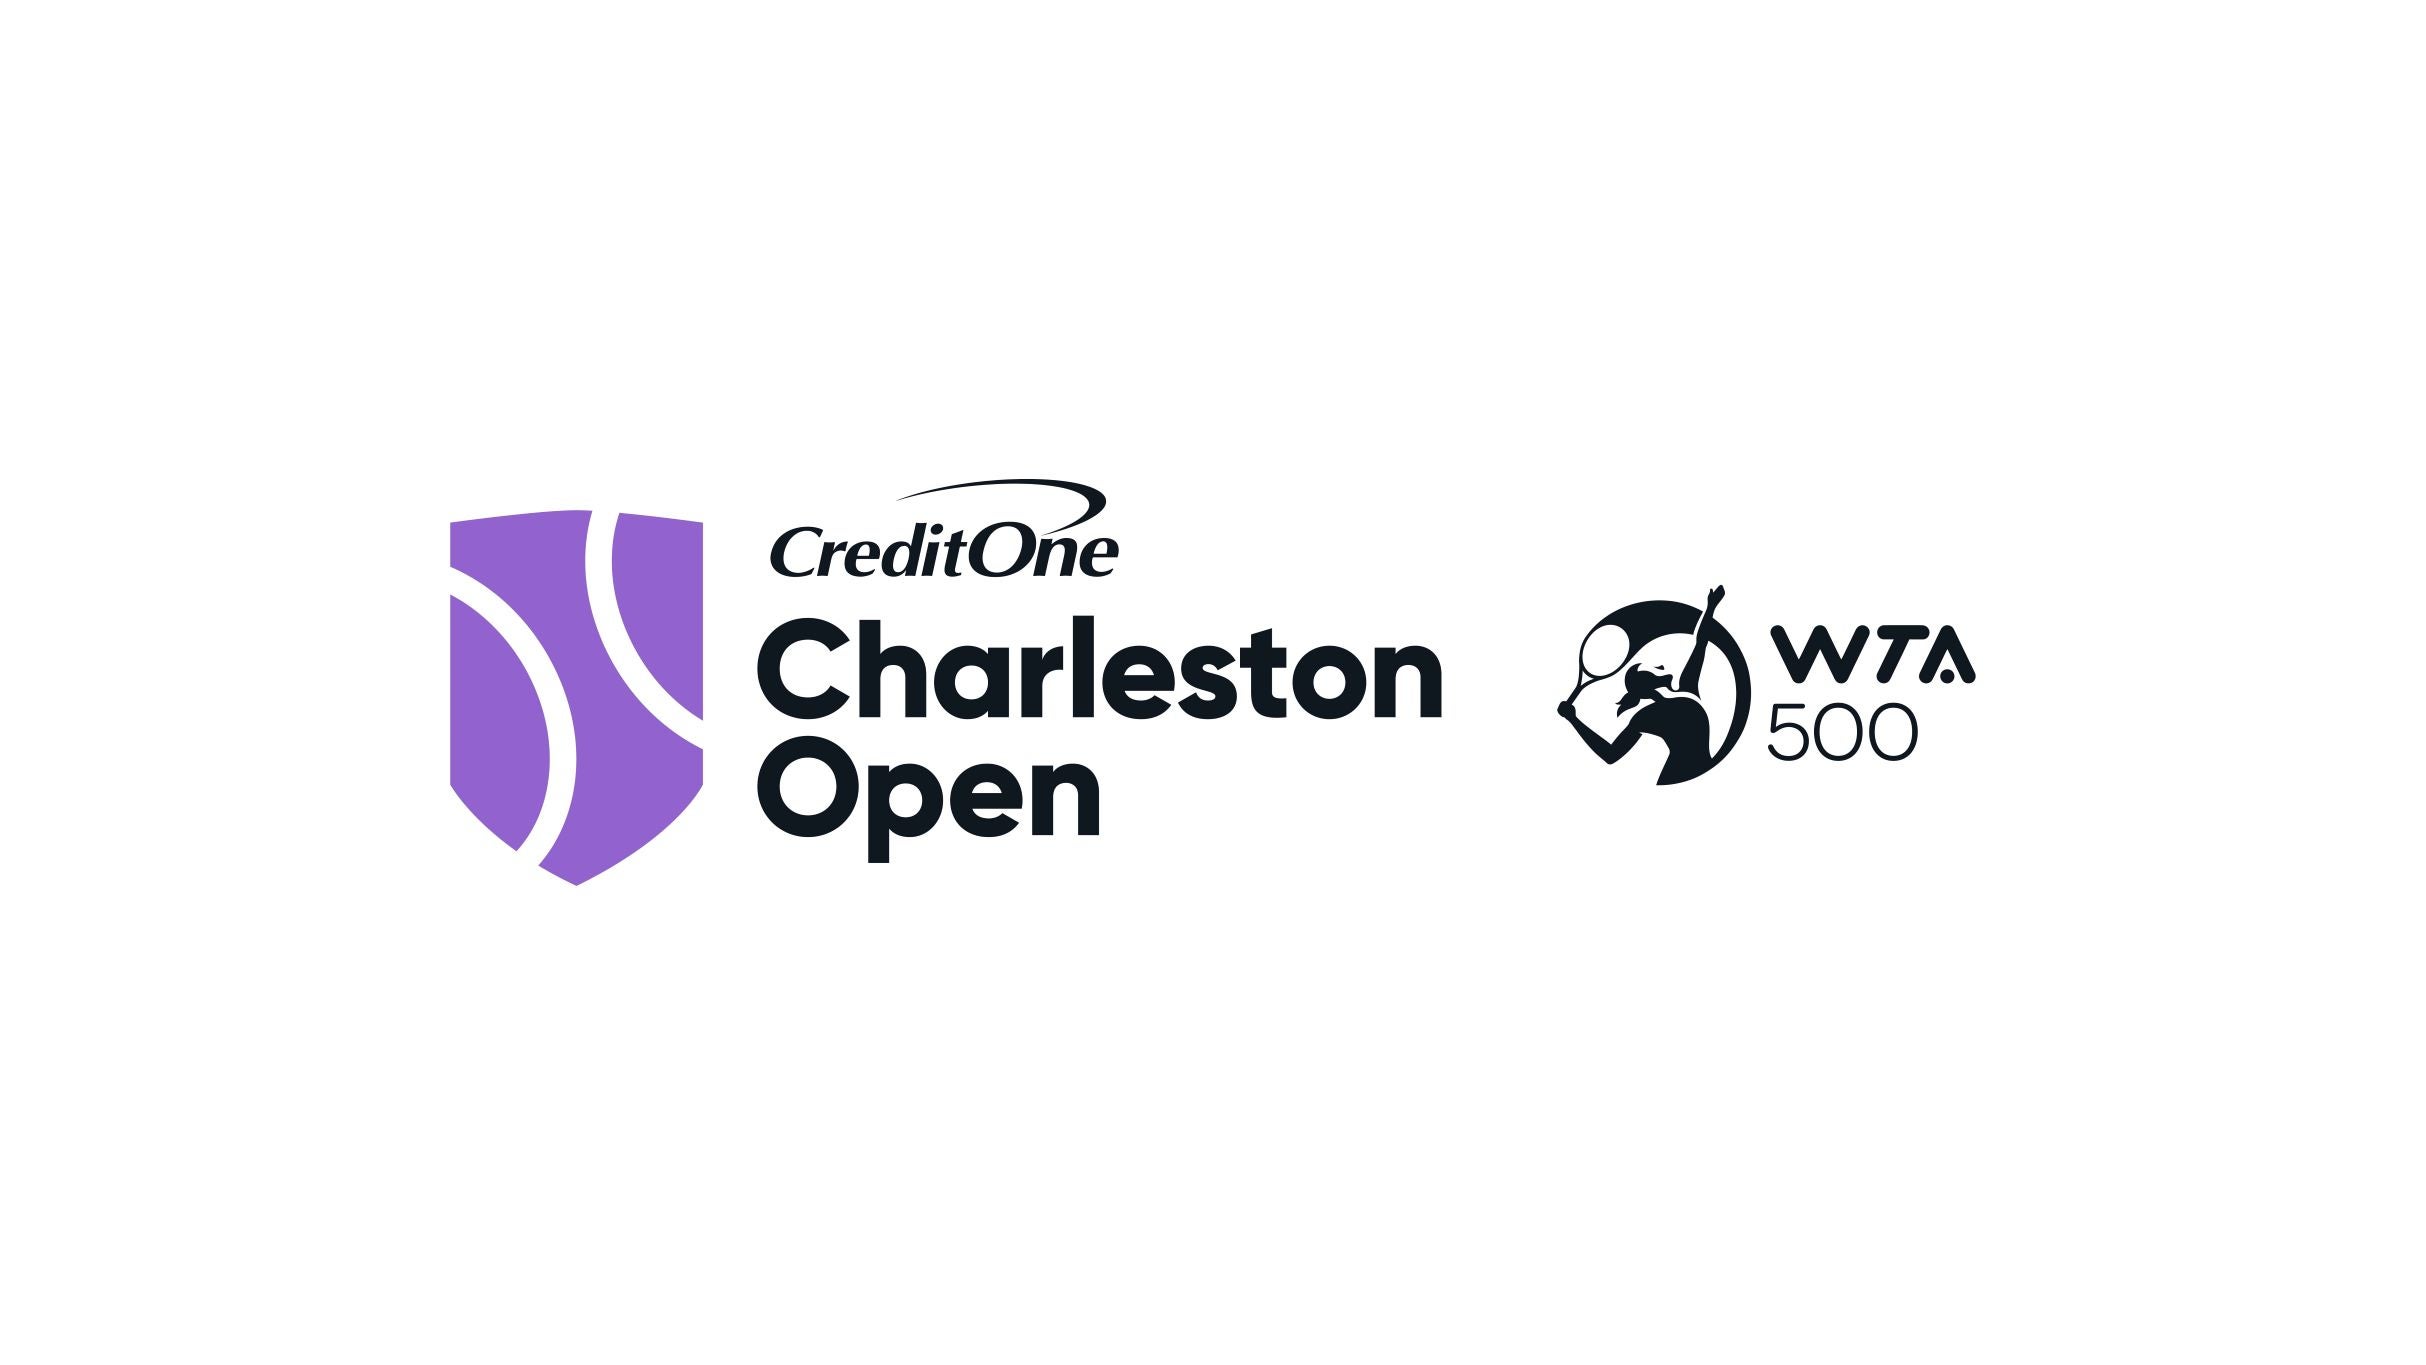 Credit One Charleston Open at Credit One Stadium